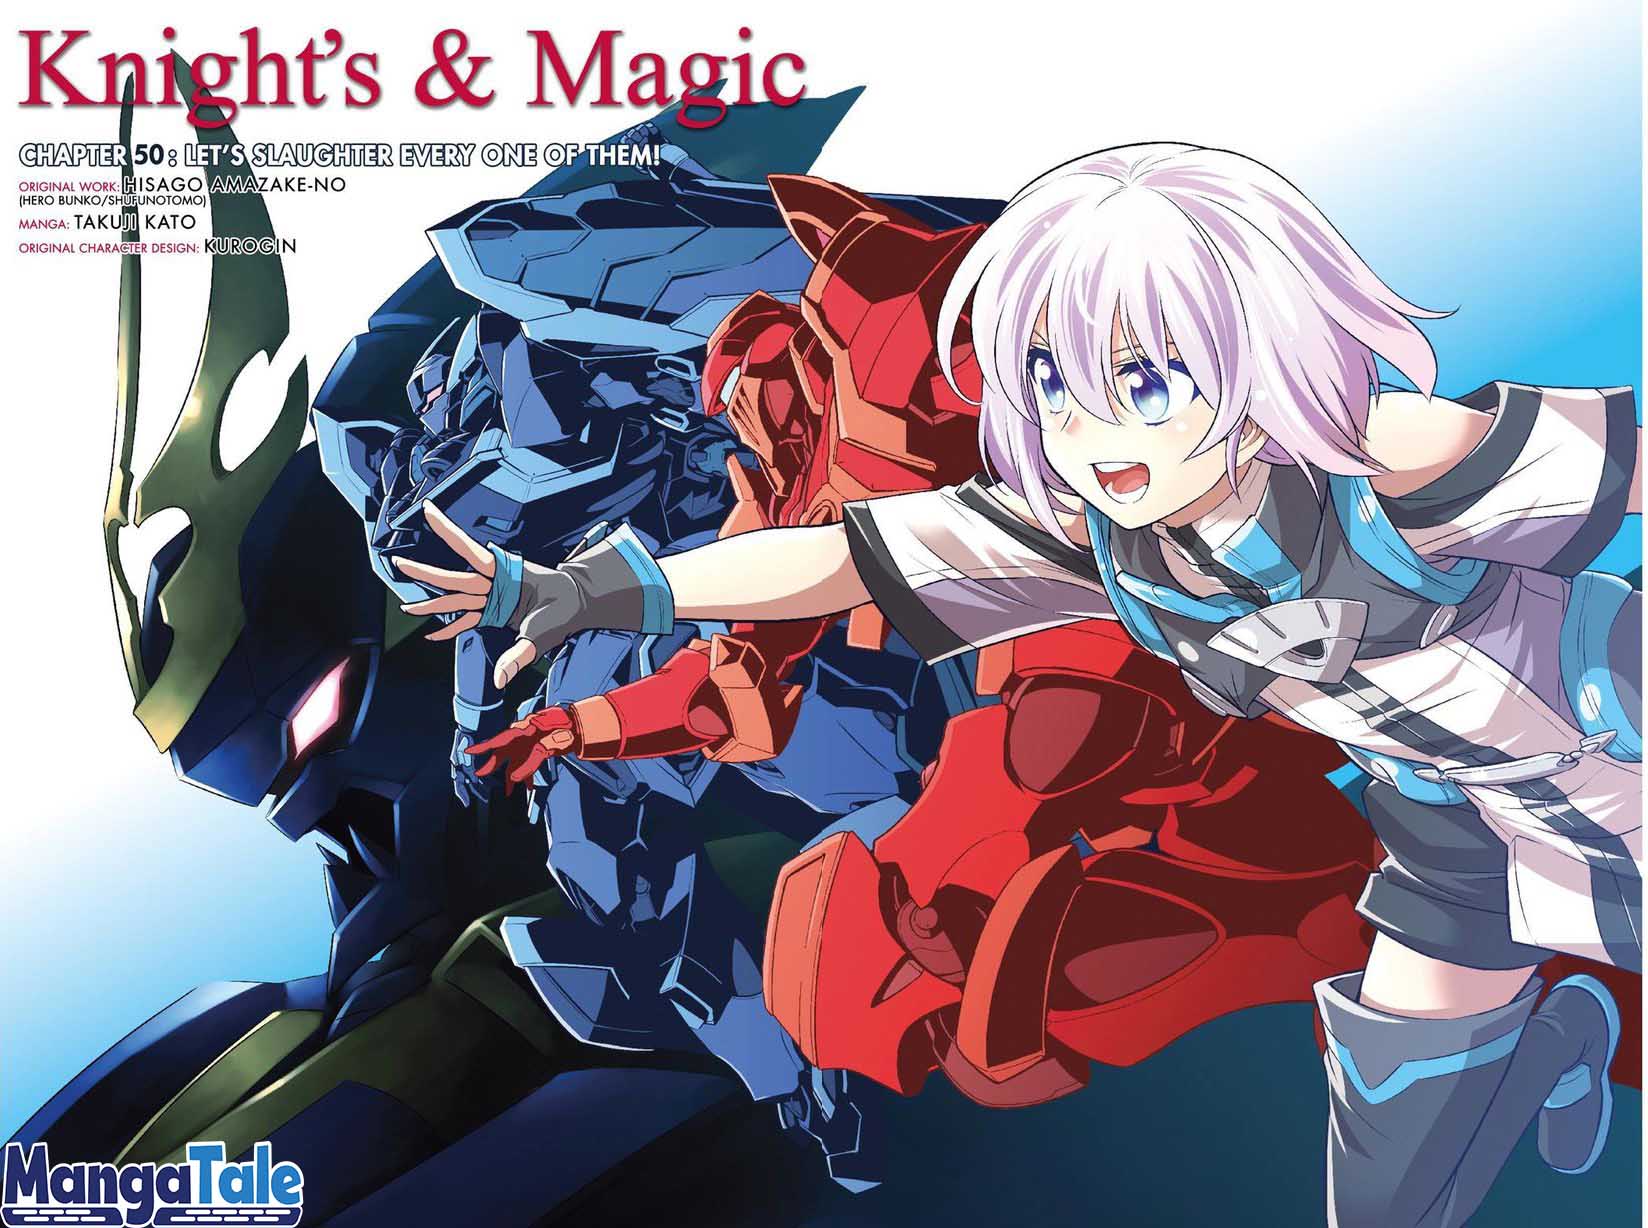 Knight’s & Magic Chapter 50